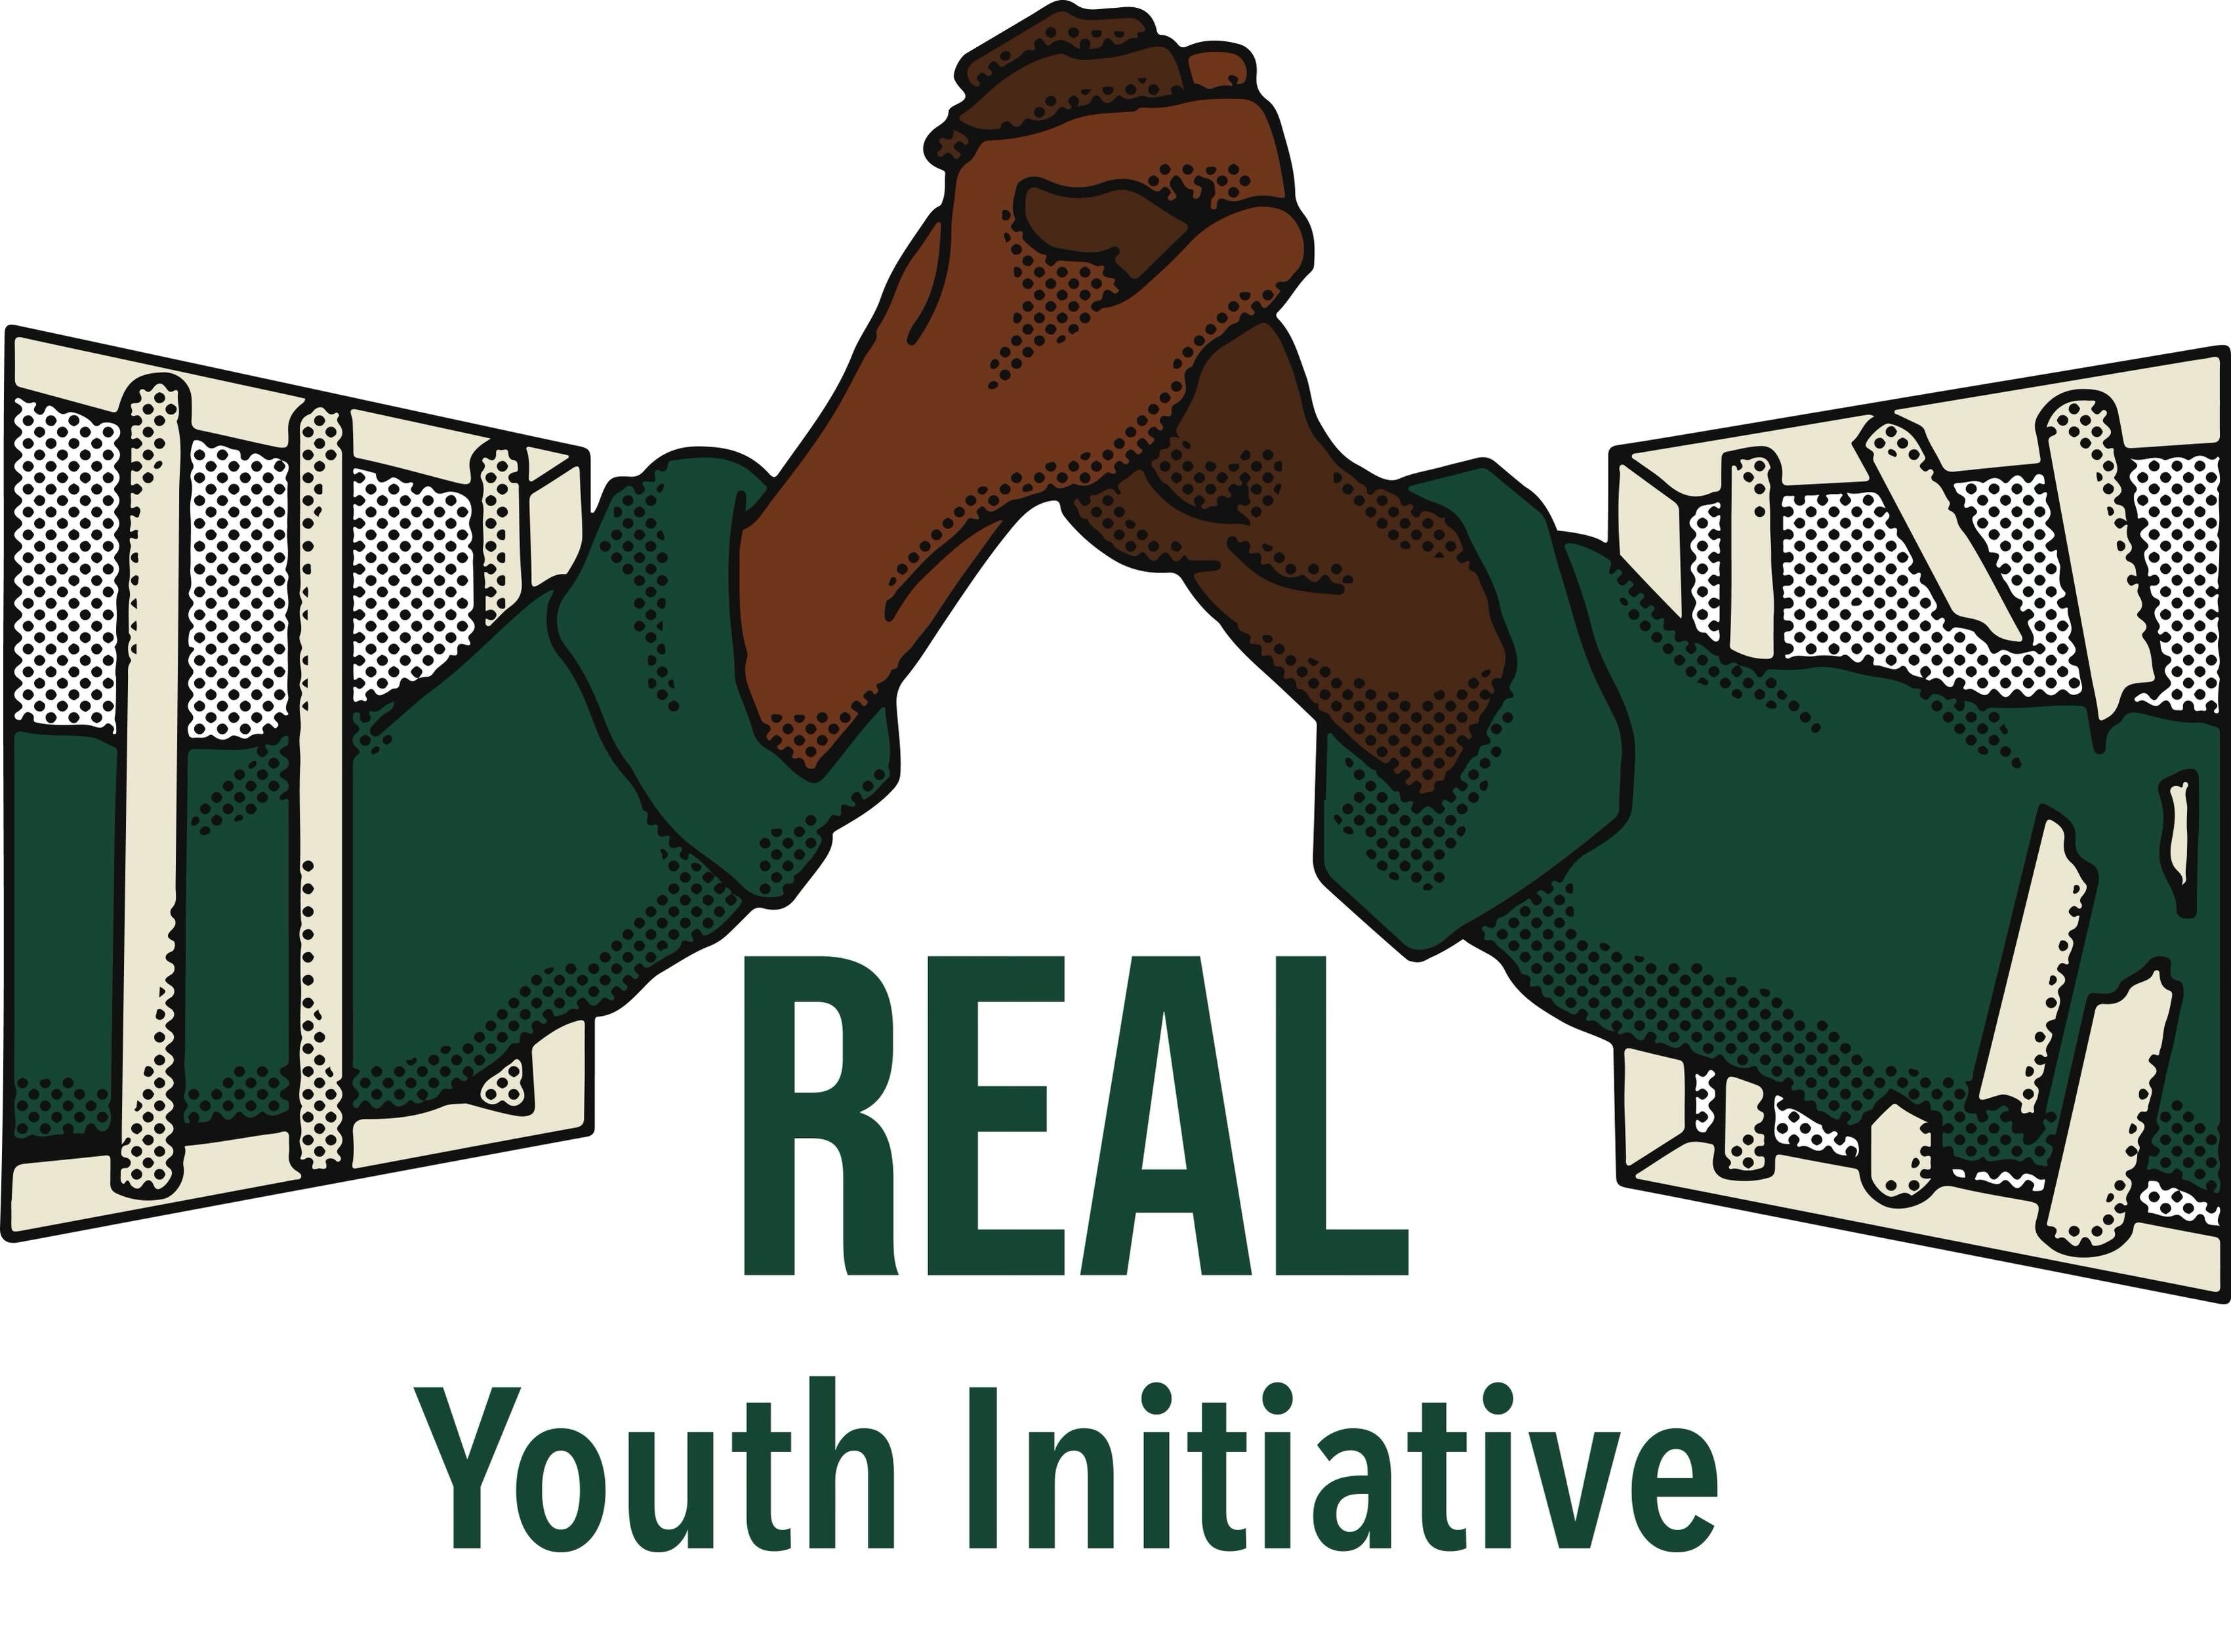 Illinois Collaboration on Youth logo